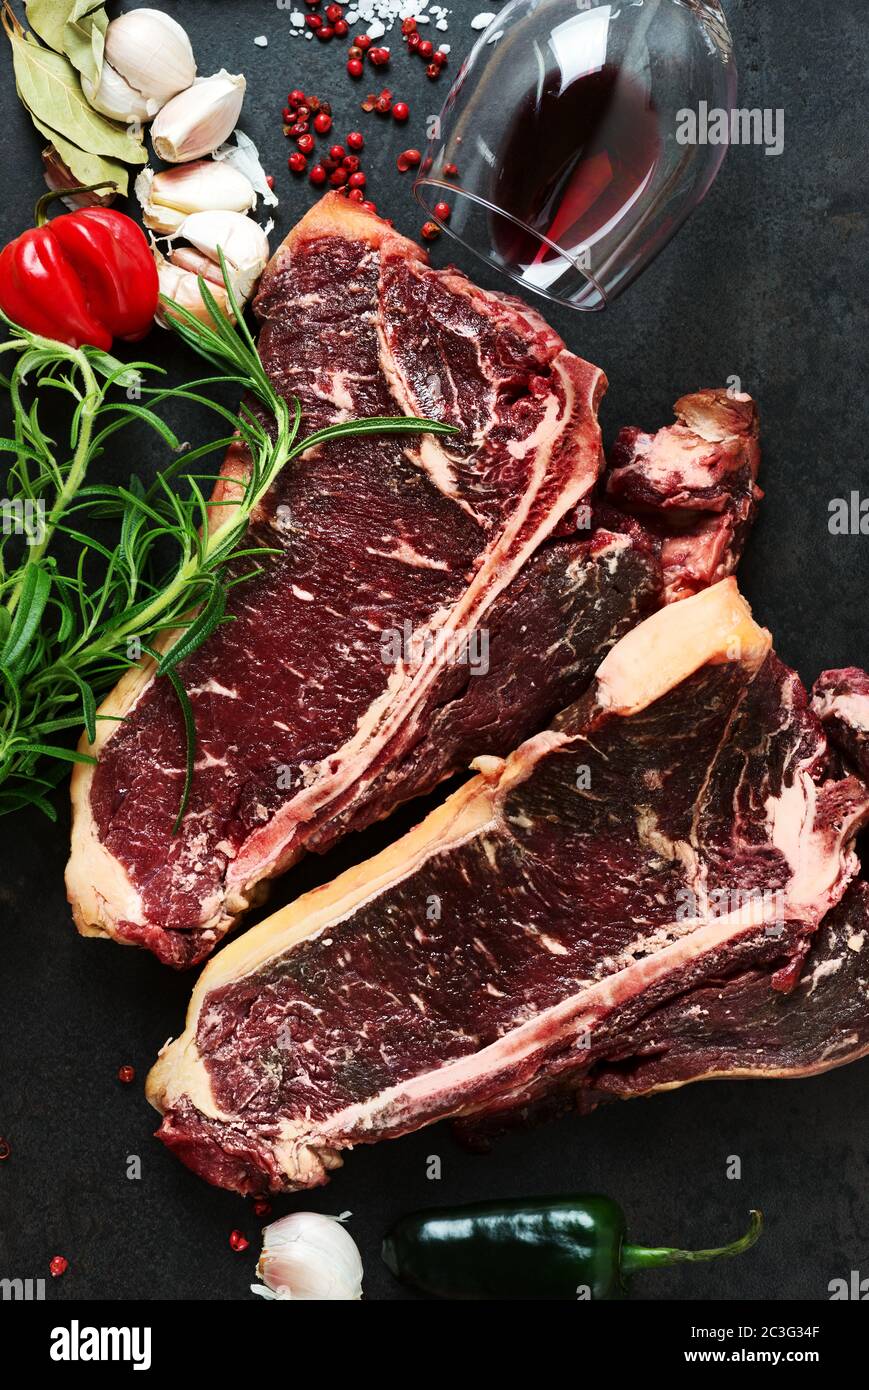 Raw aged steak and seasoning on dark background Stock Photo